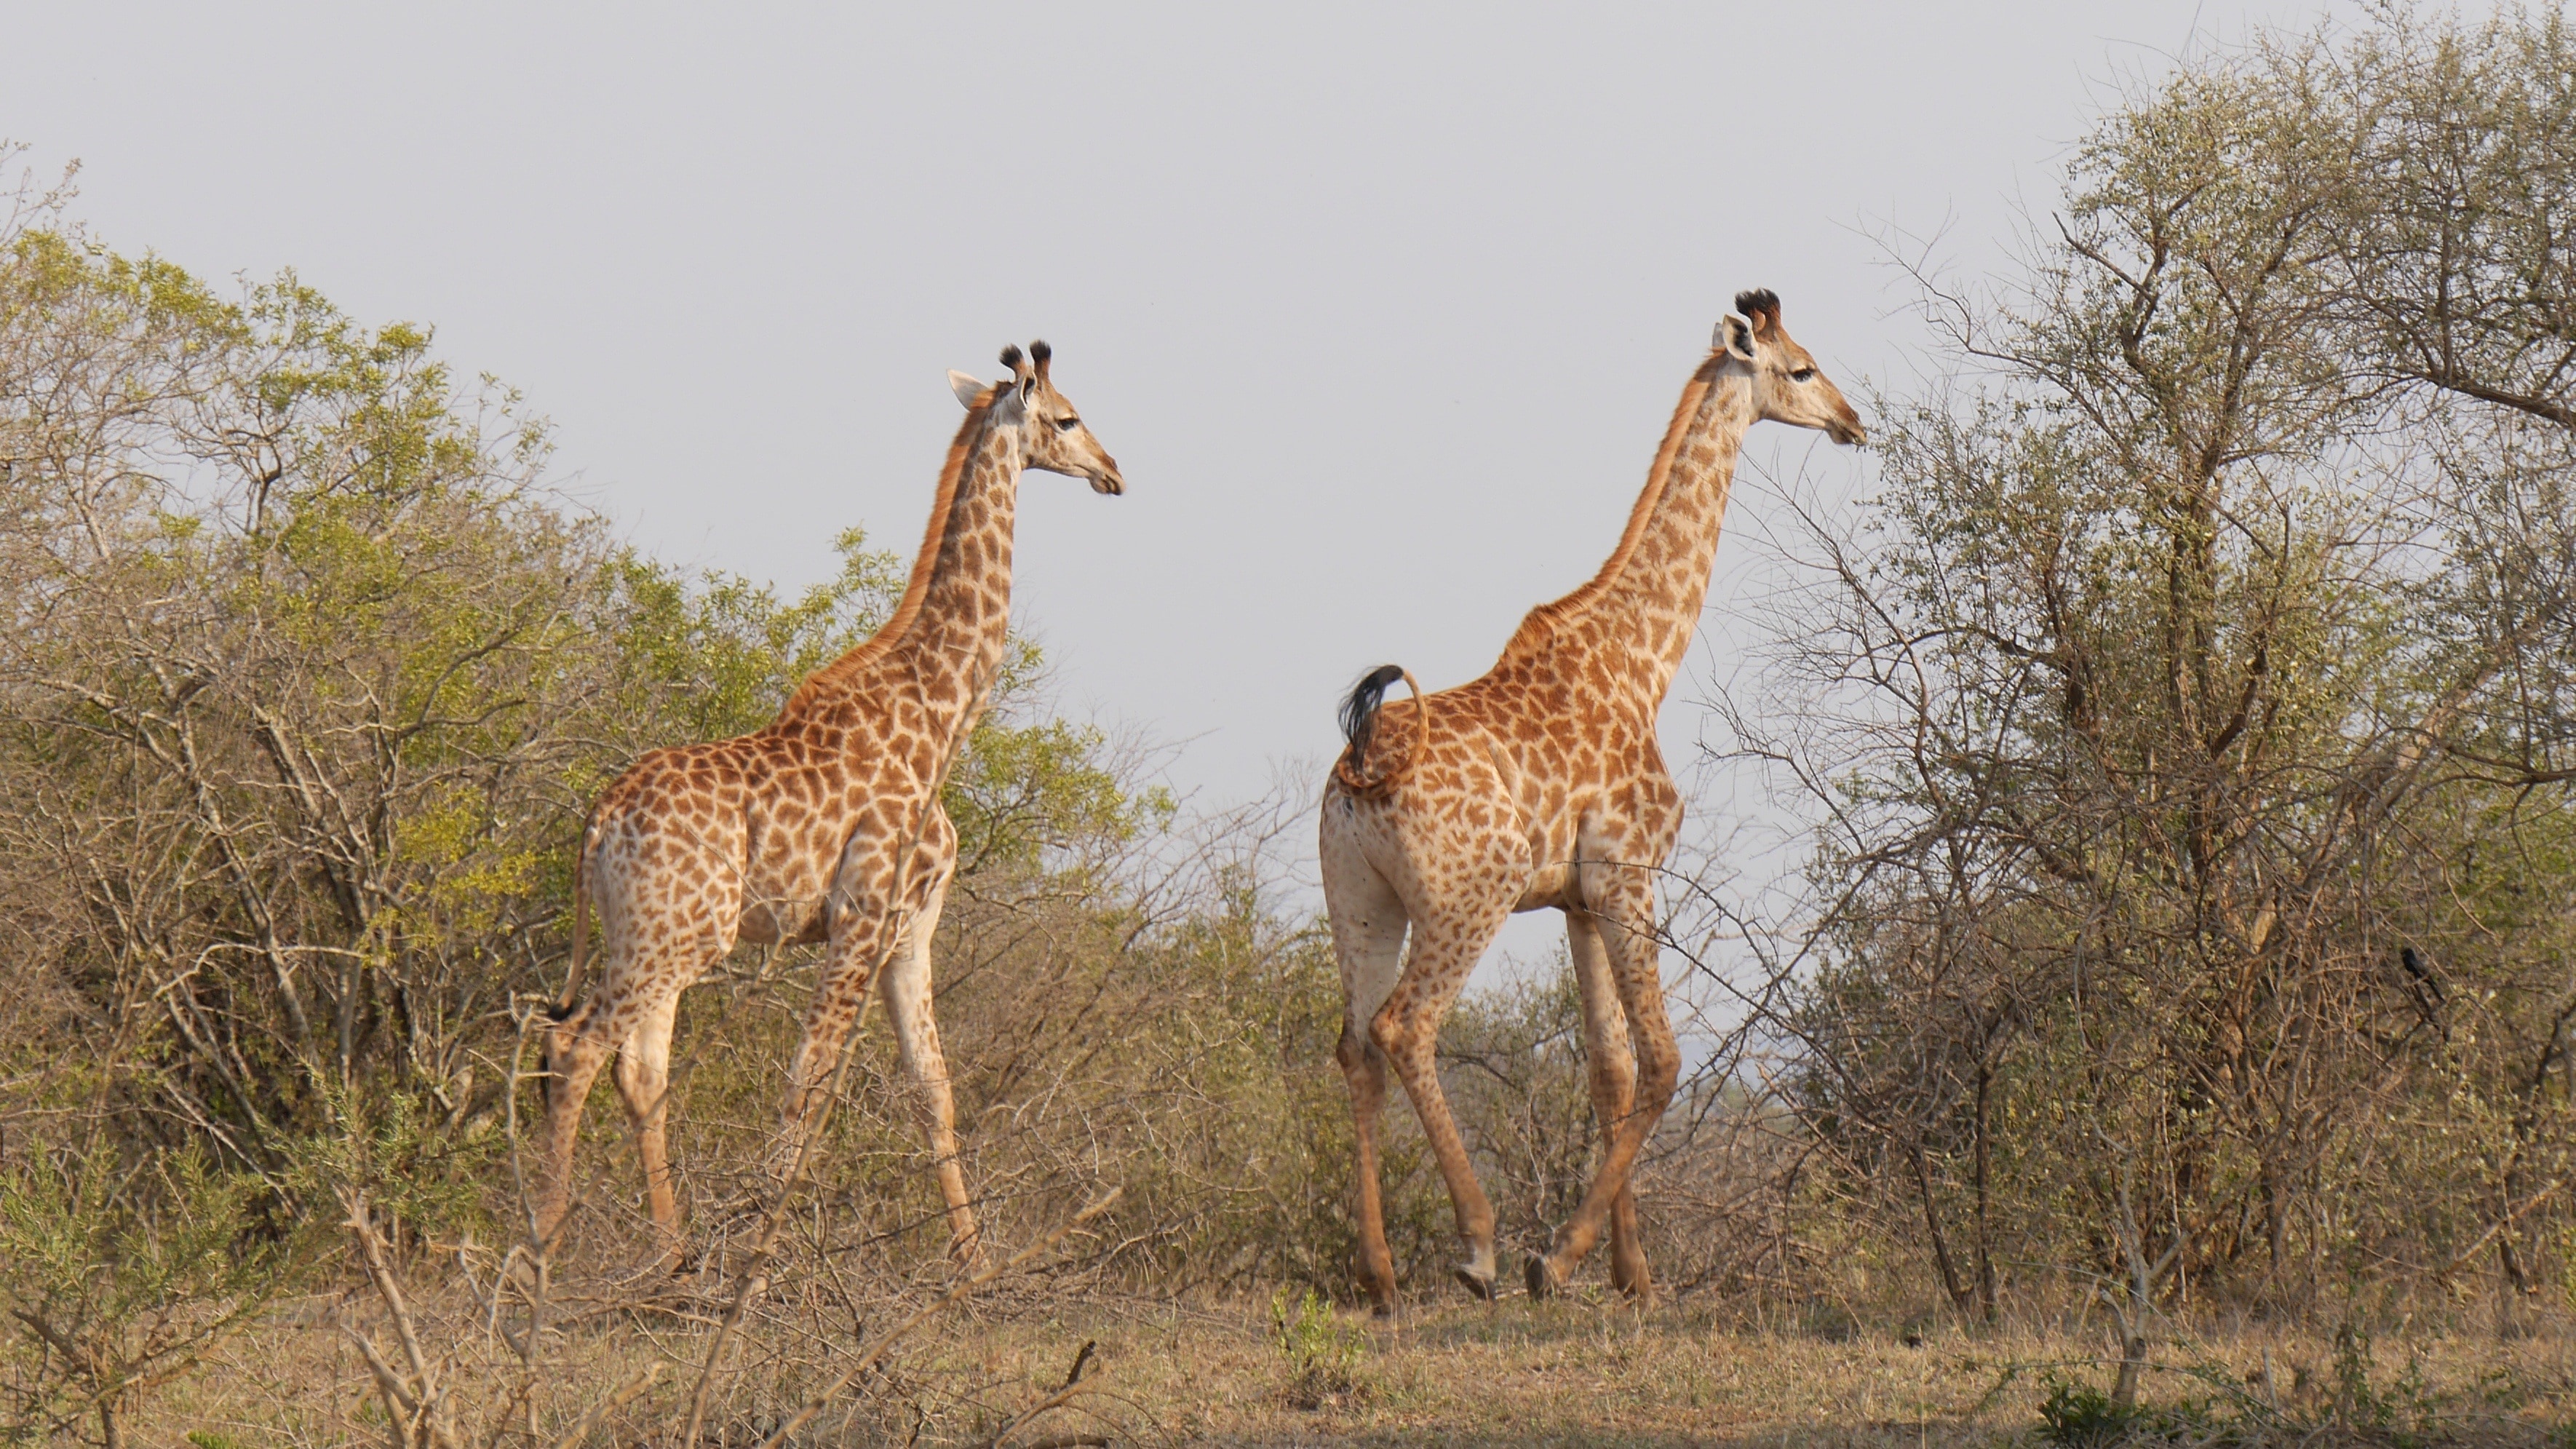 two giraffe near trees during daytime